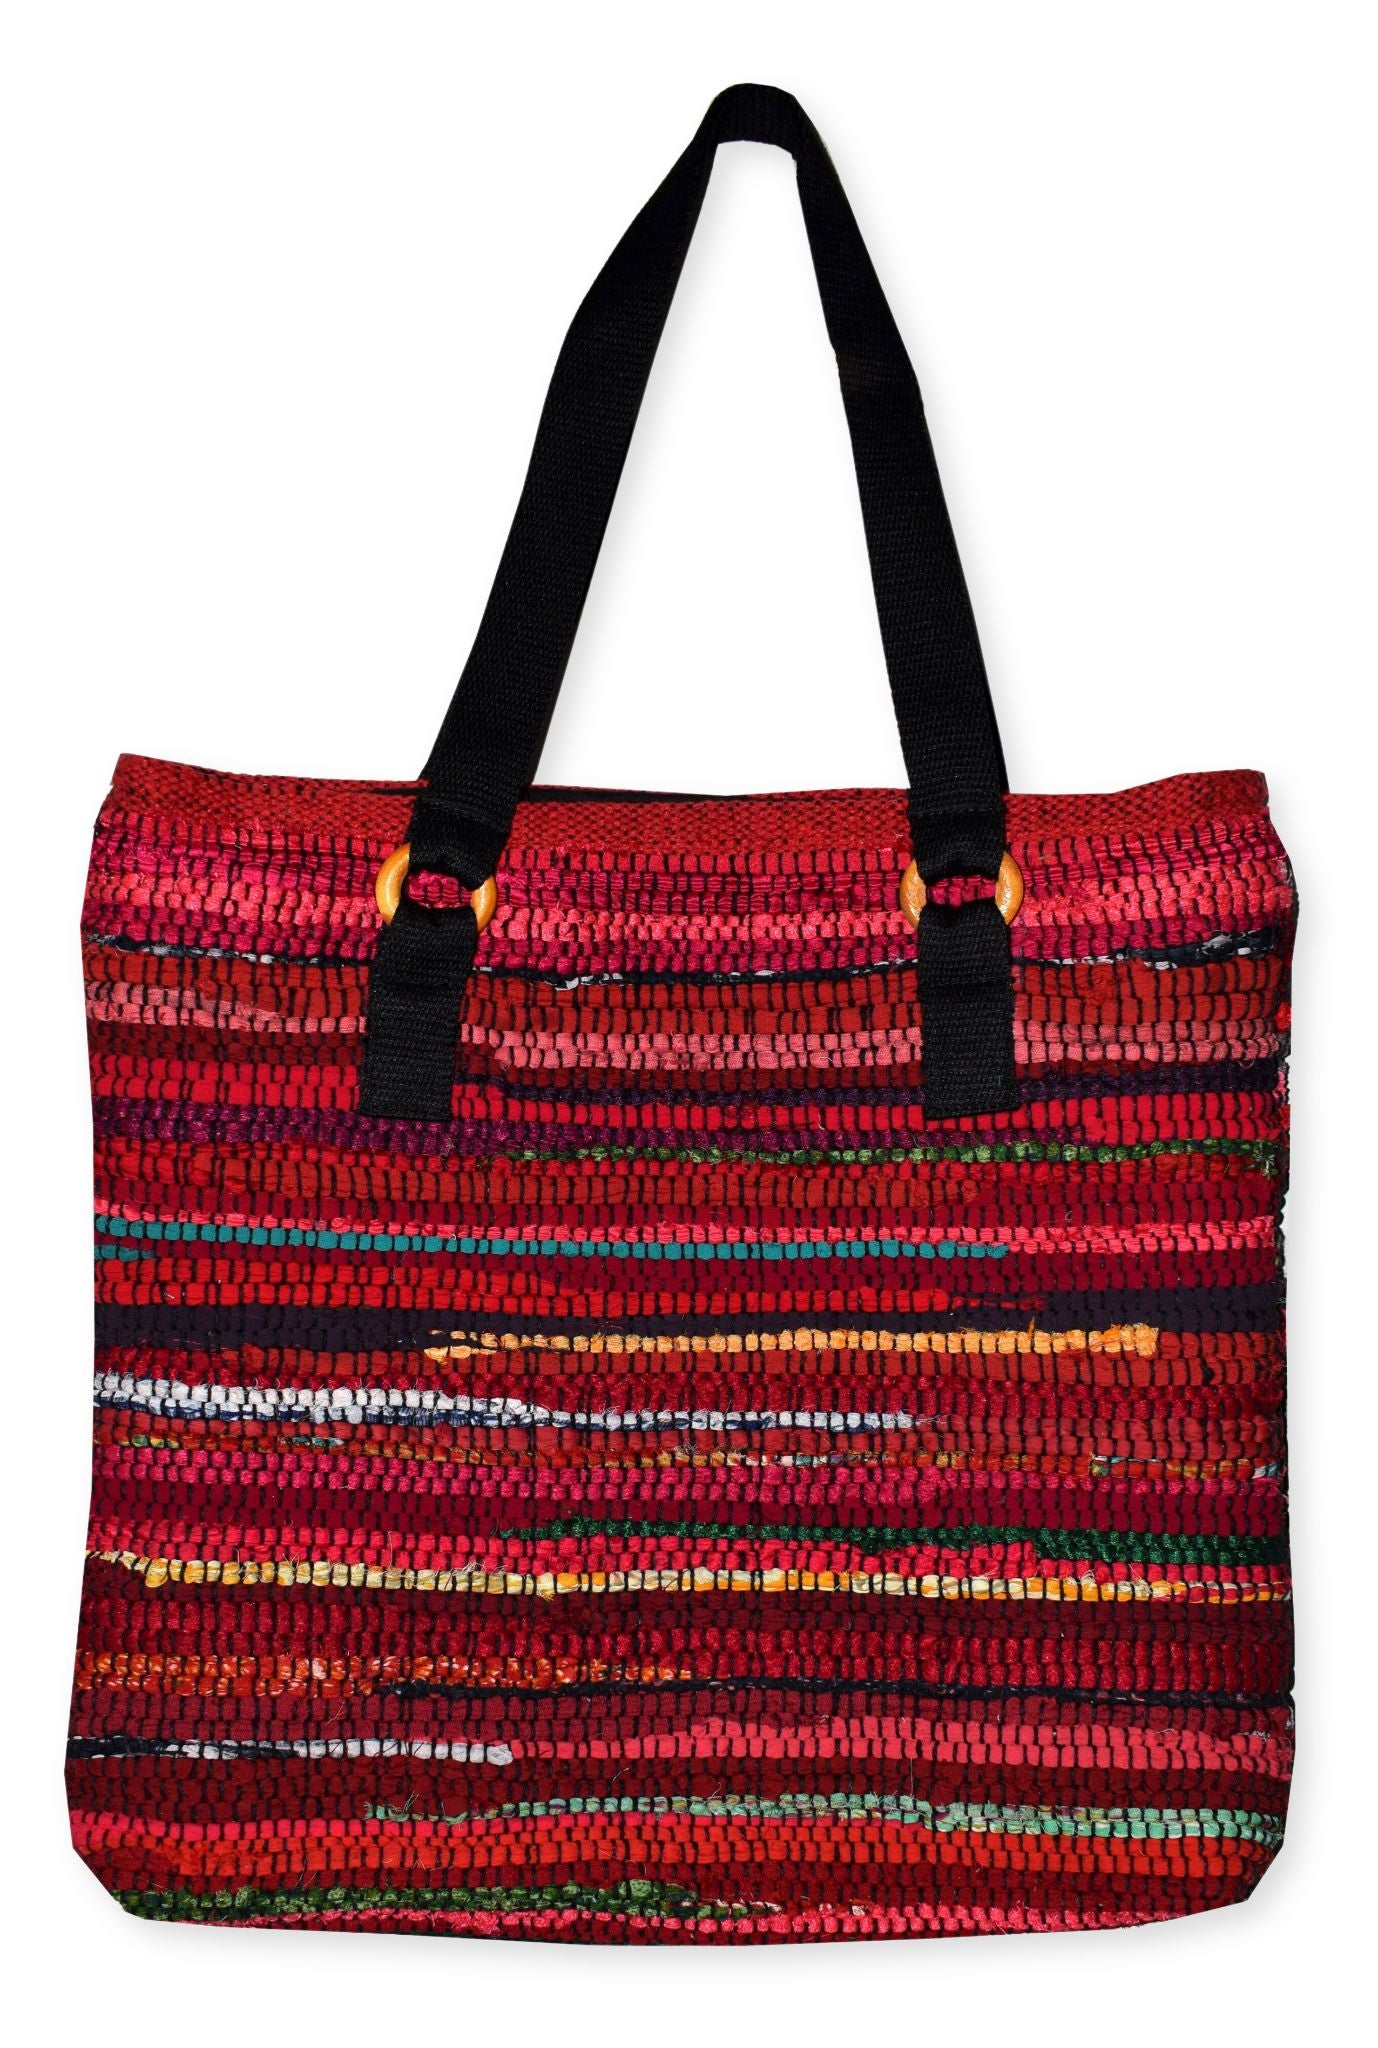 ''Hippie Tote Bags, Design #2''